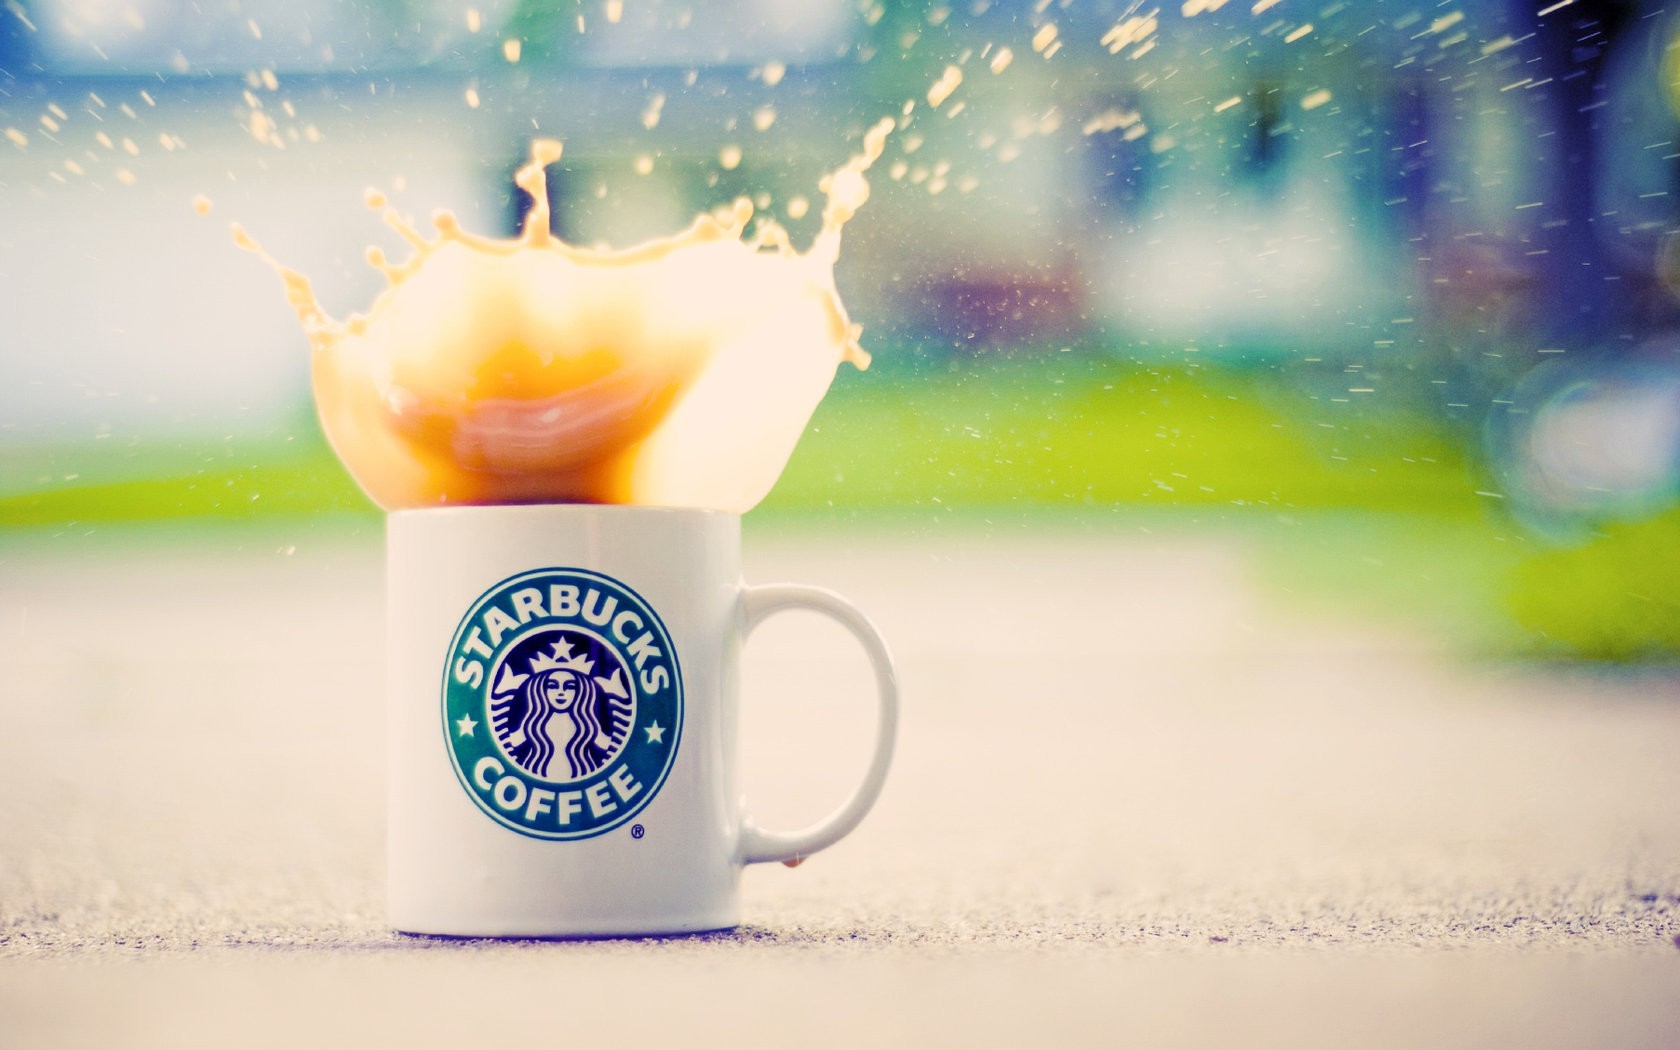 General 1680x1050 coffee splashes Starbucks food cup brand